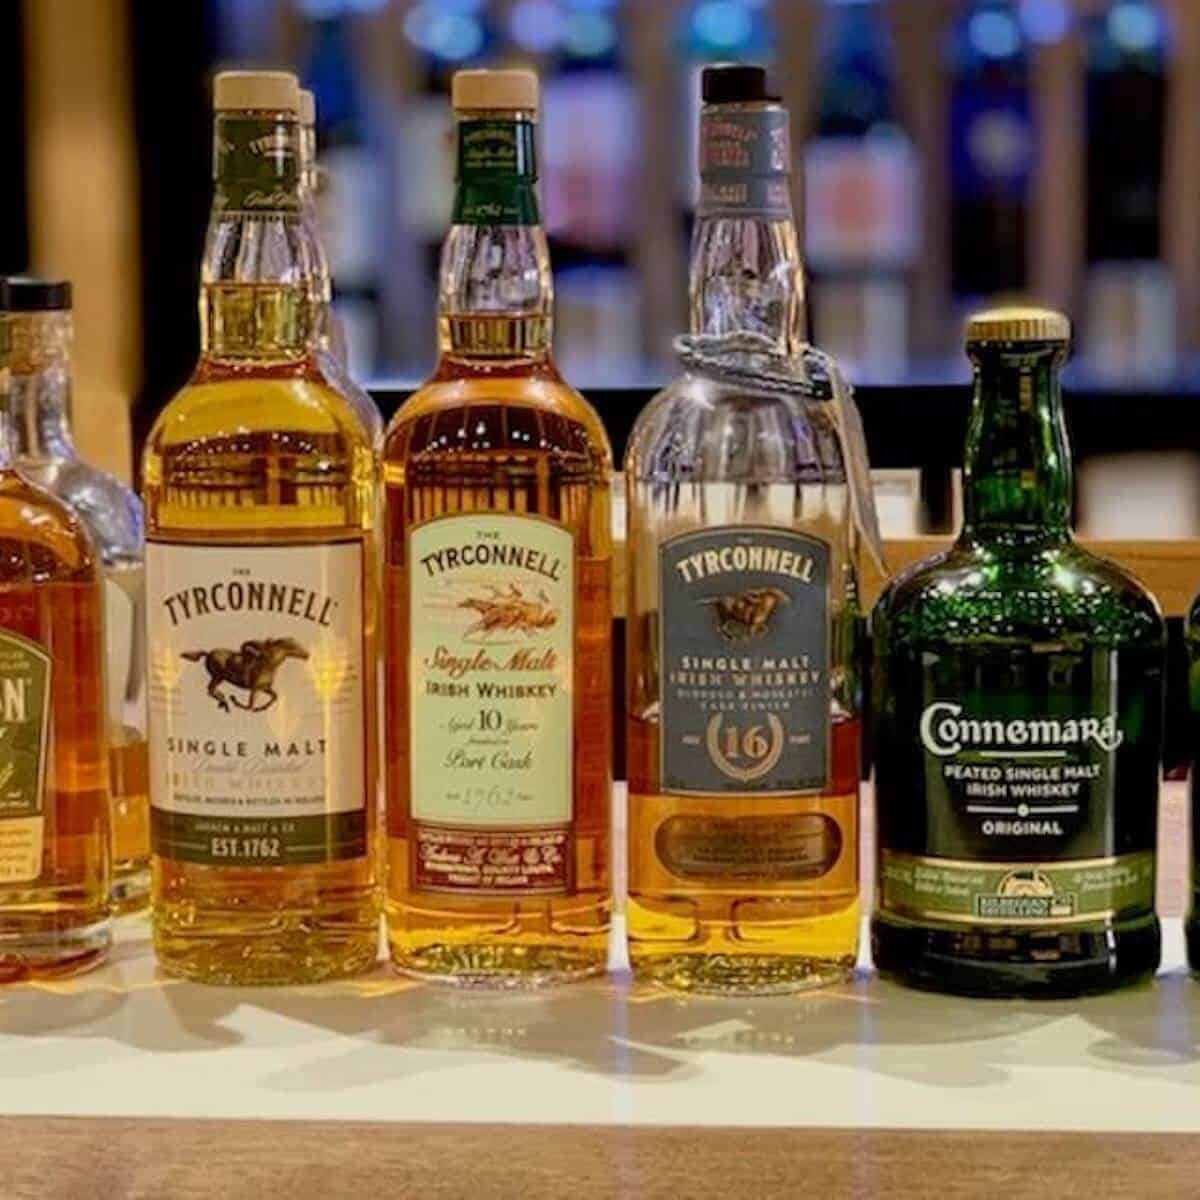 Kilbeggan Irish Whiskey selections in bottles on a counter.